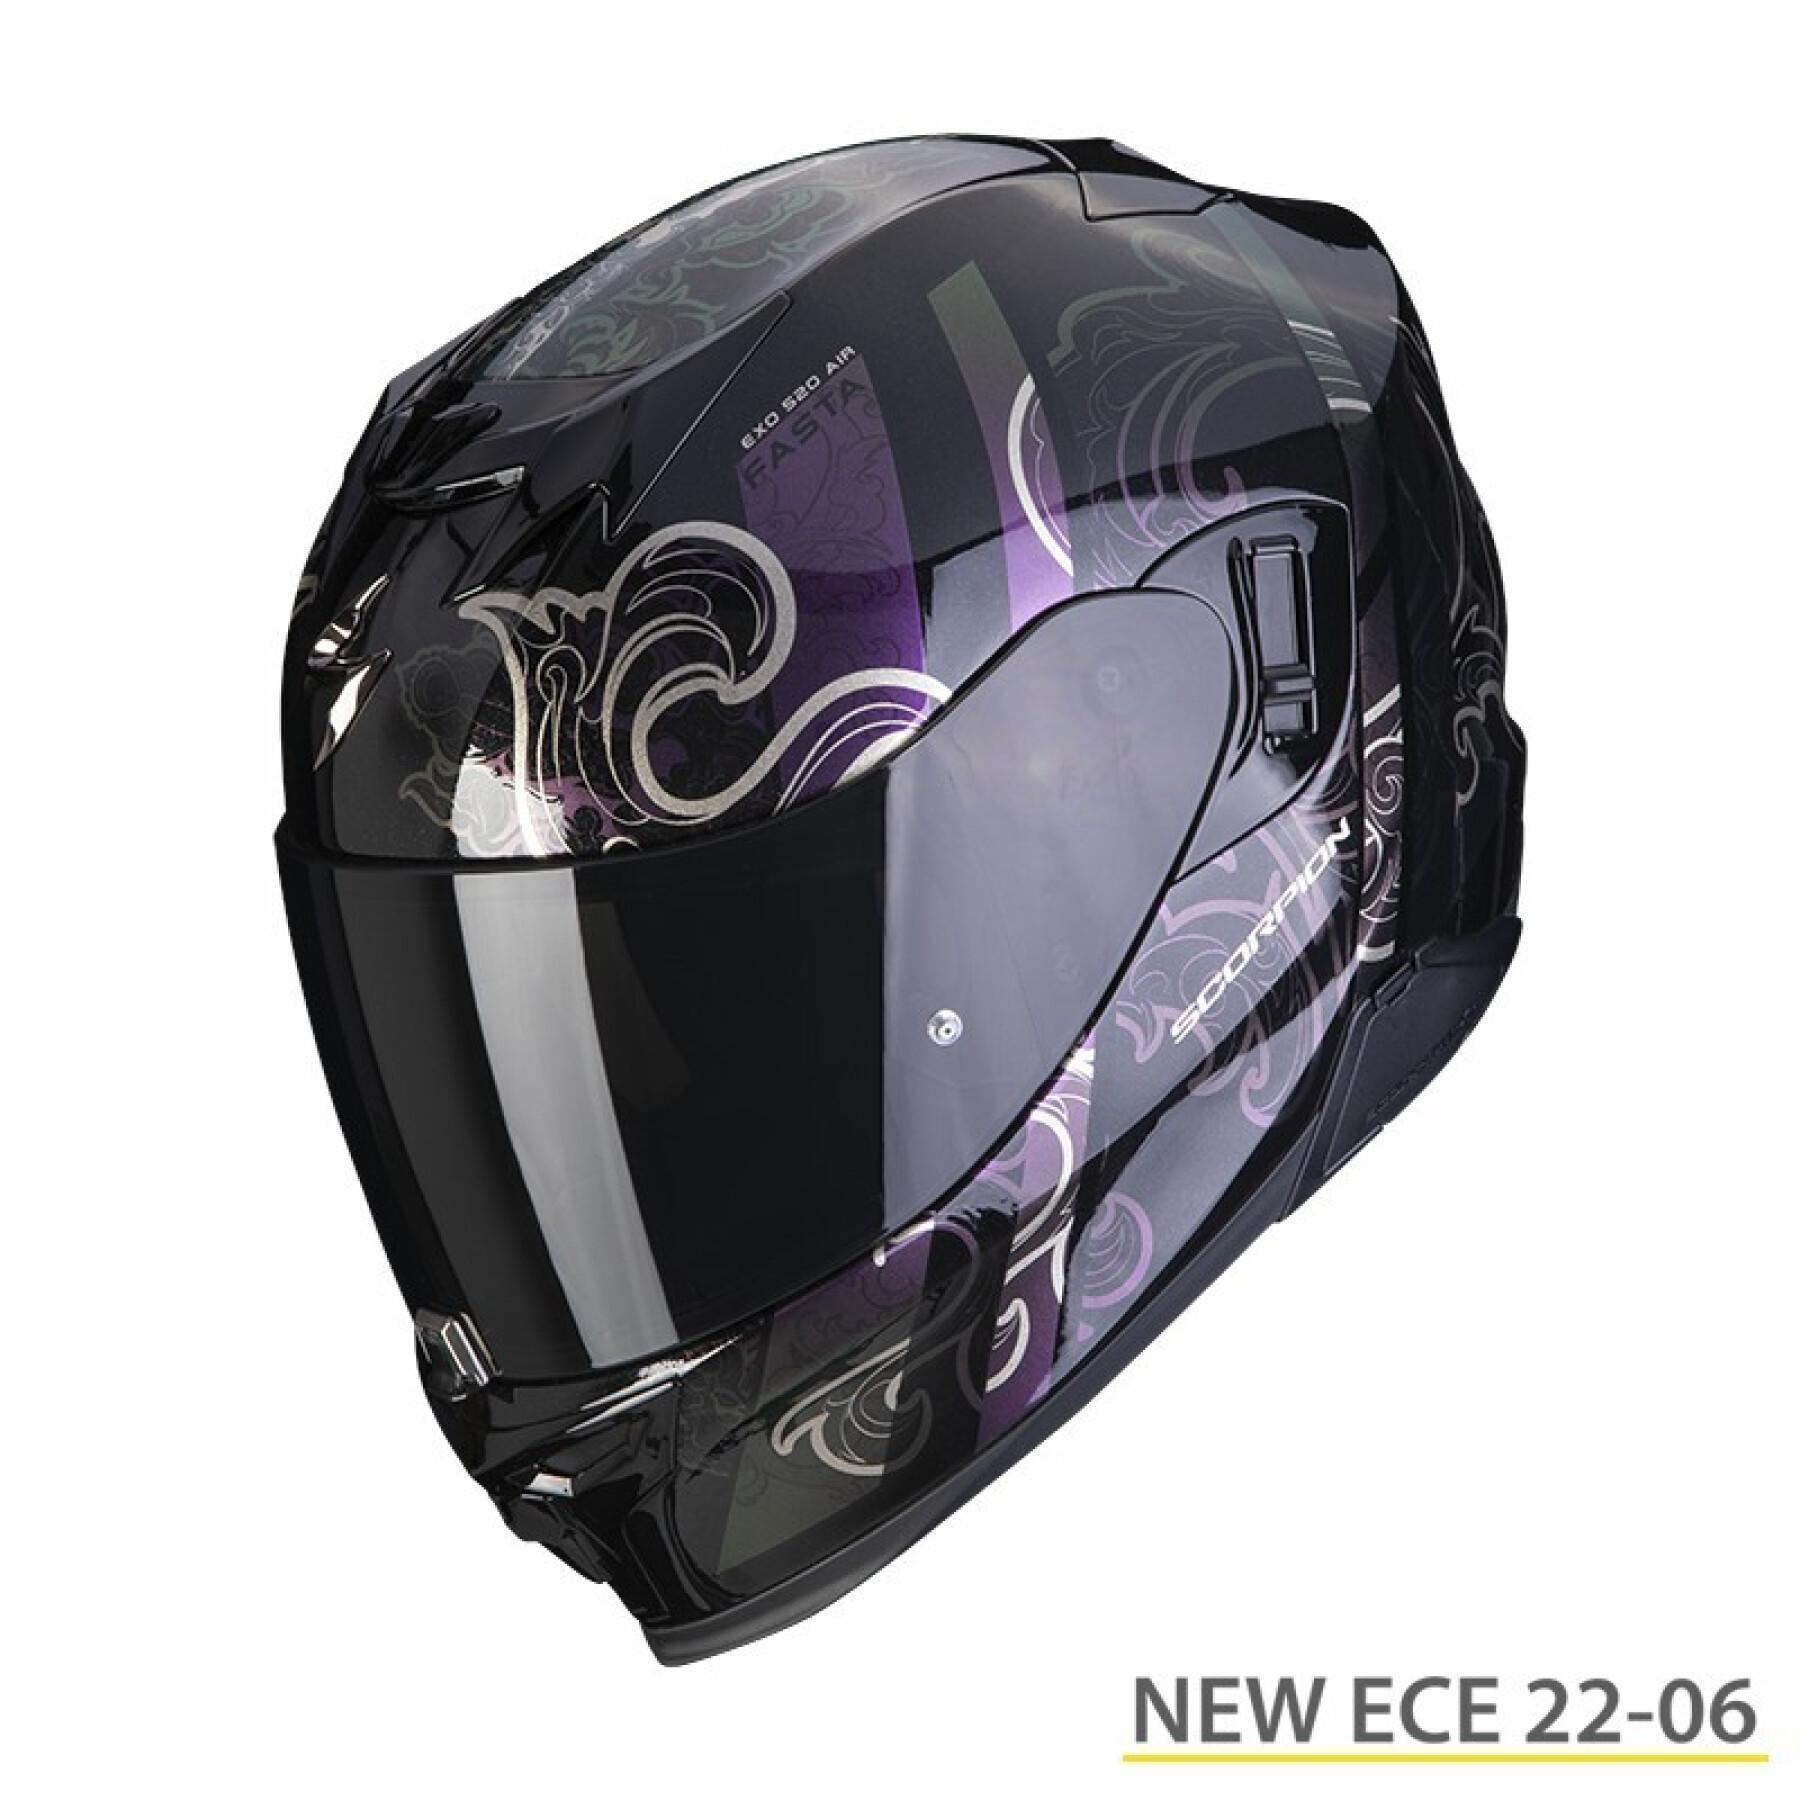 Full face motorcycle helmet Scorpion Exo-520 Evo Air Fasta ECE 22-06